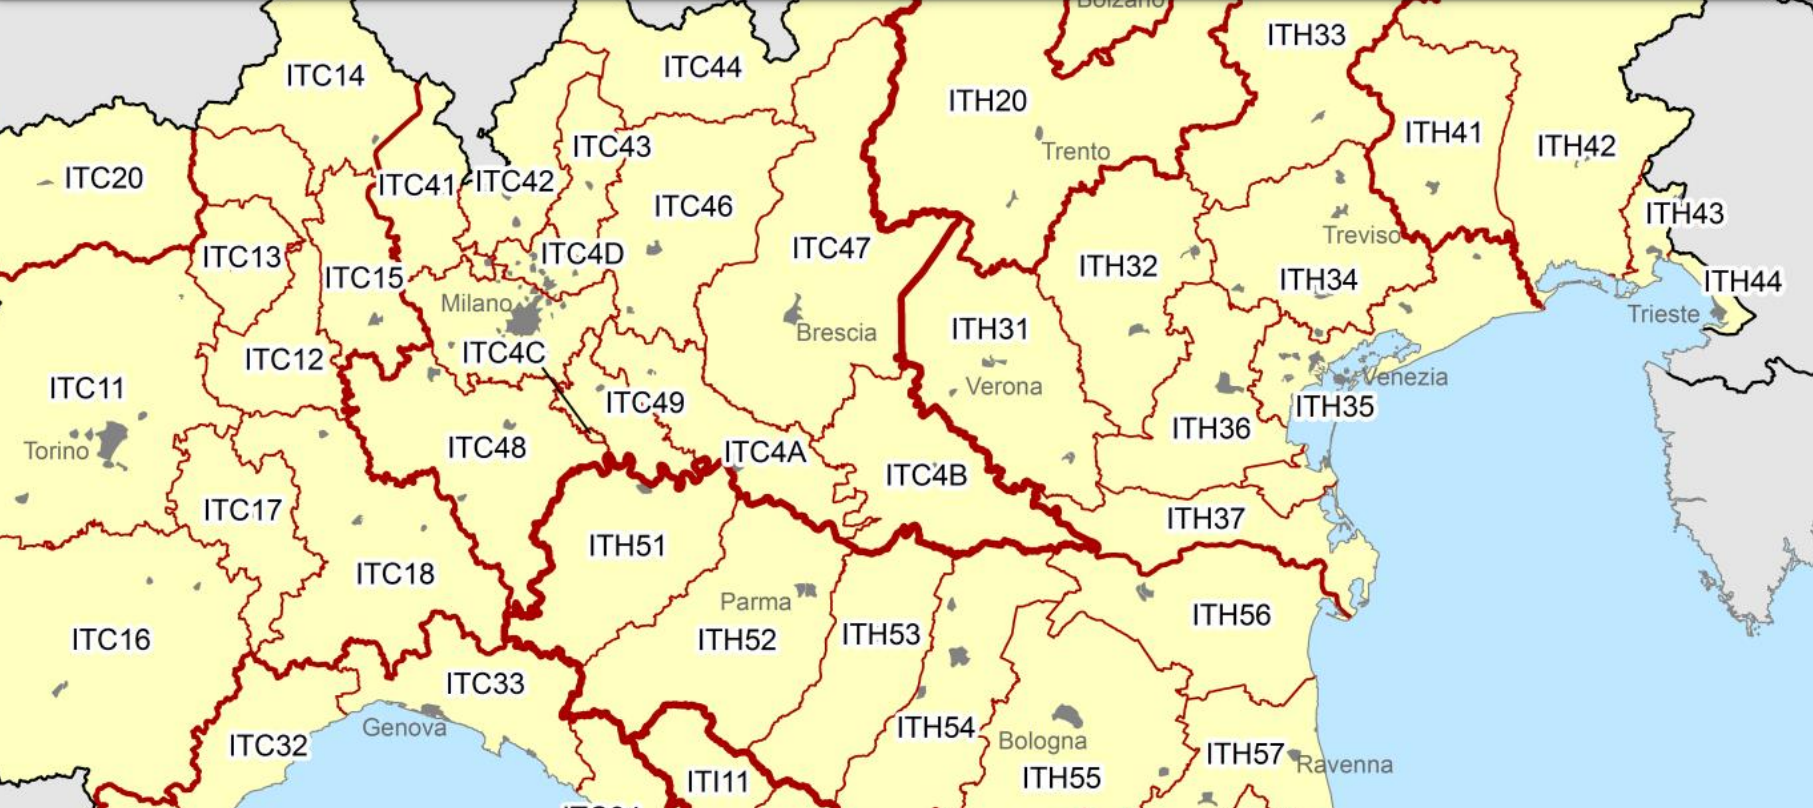 North Italy NUTS3 regions